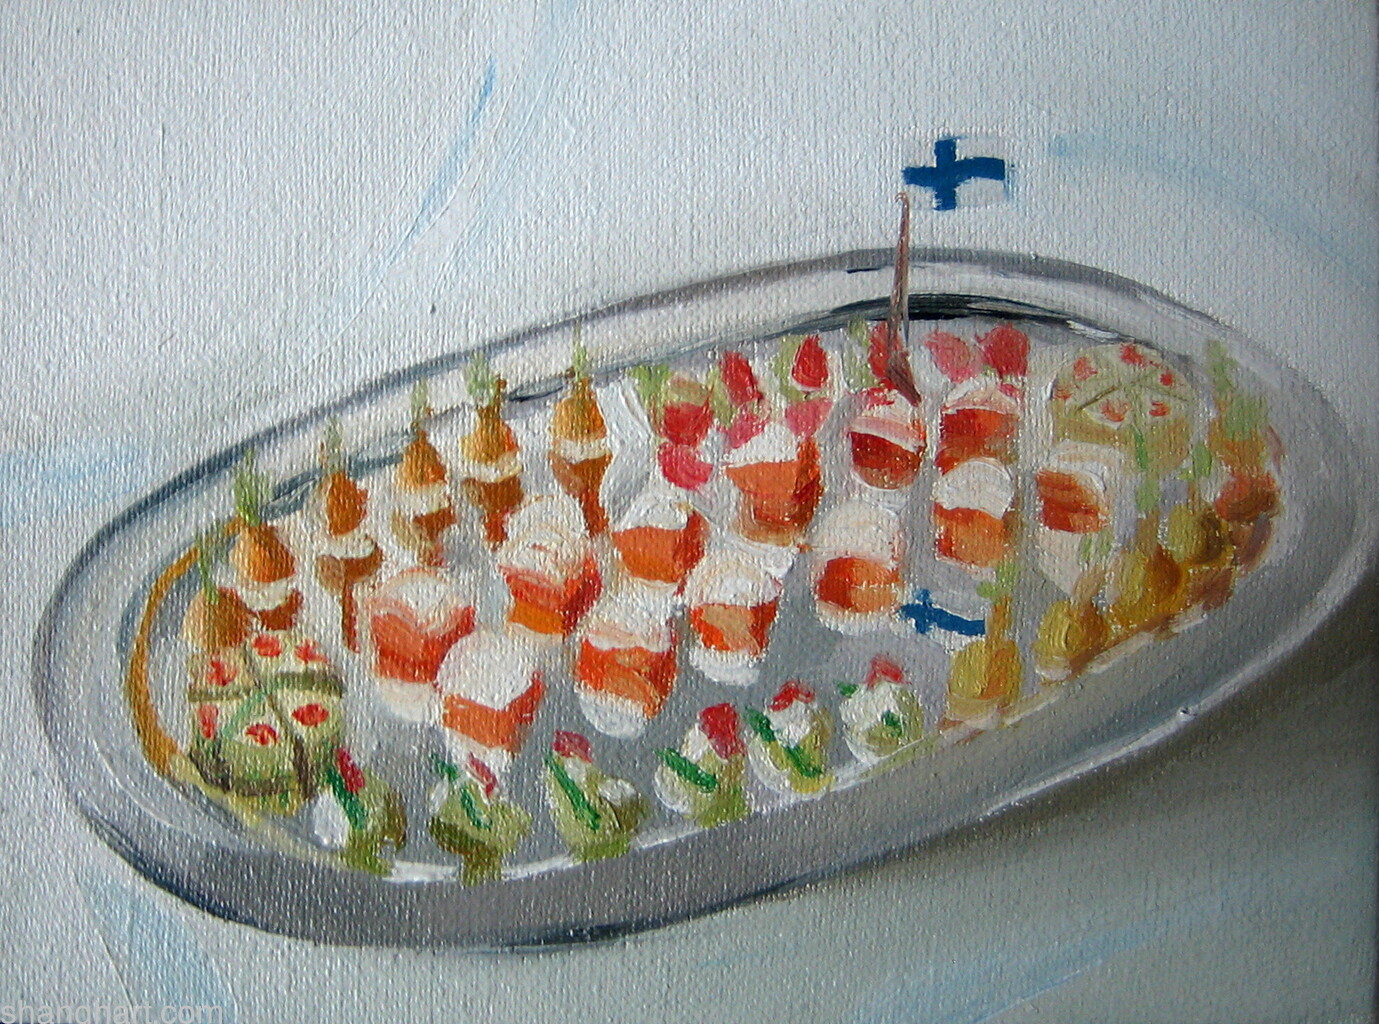 2008, 14x20cm, oil on canvas